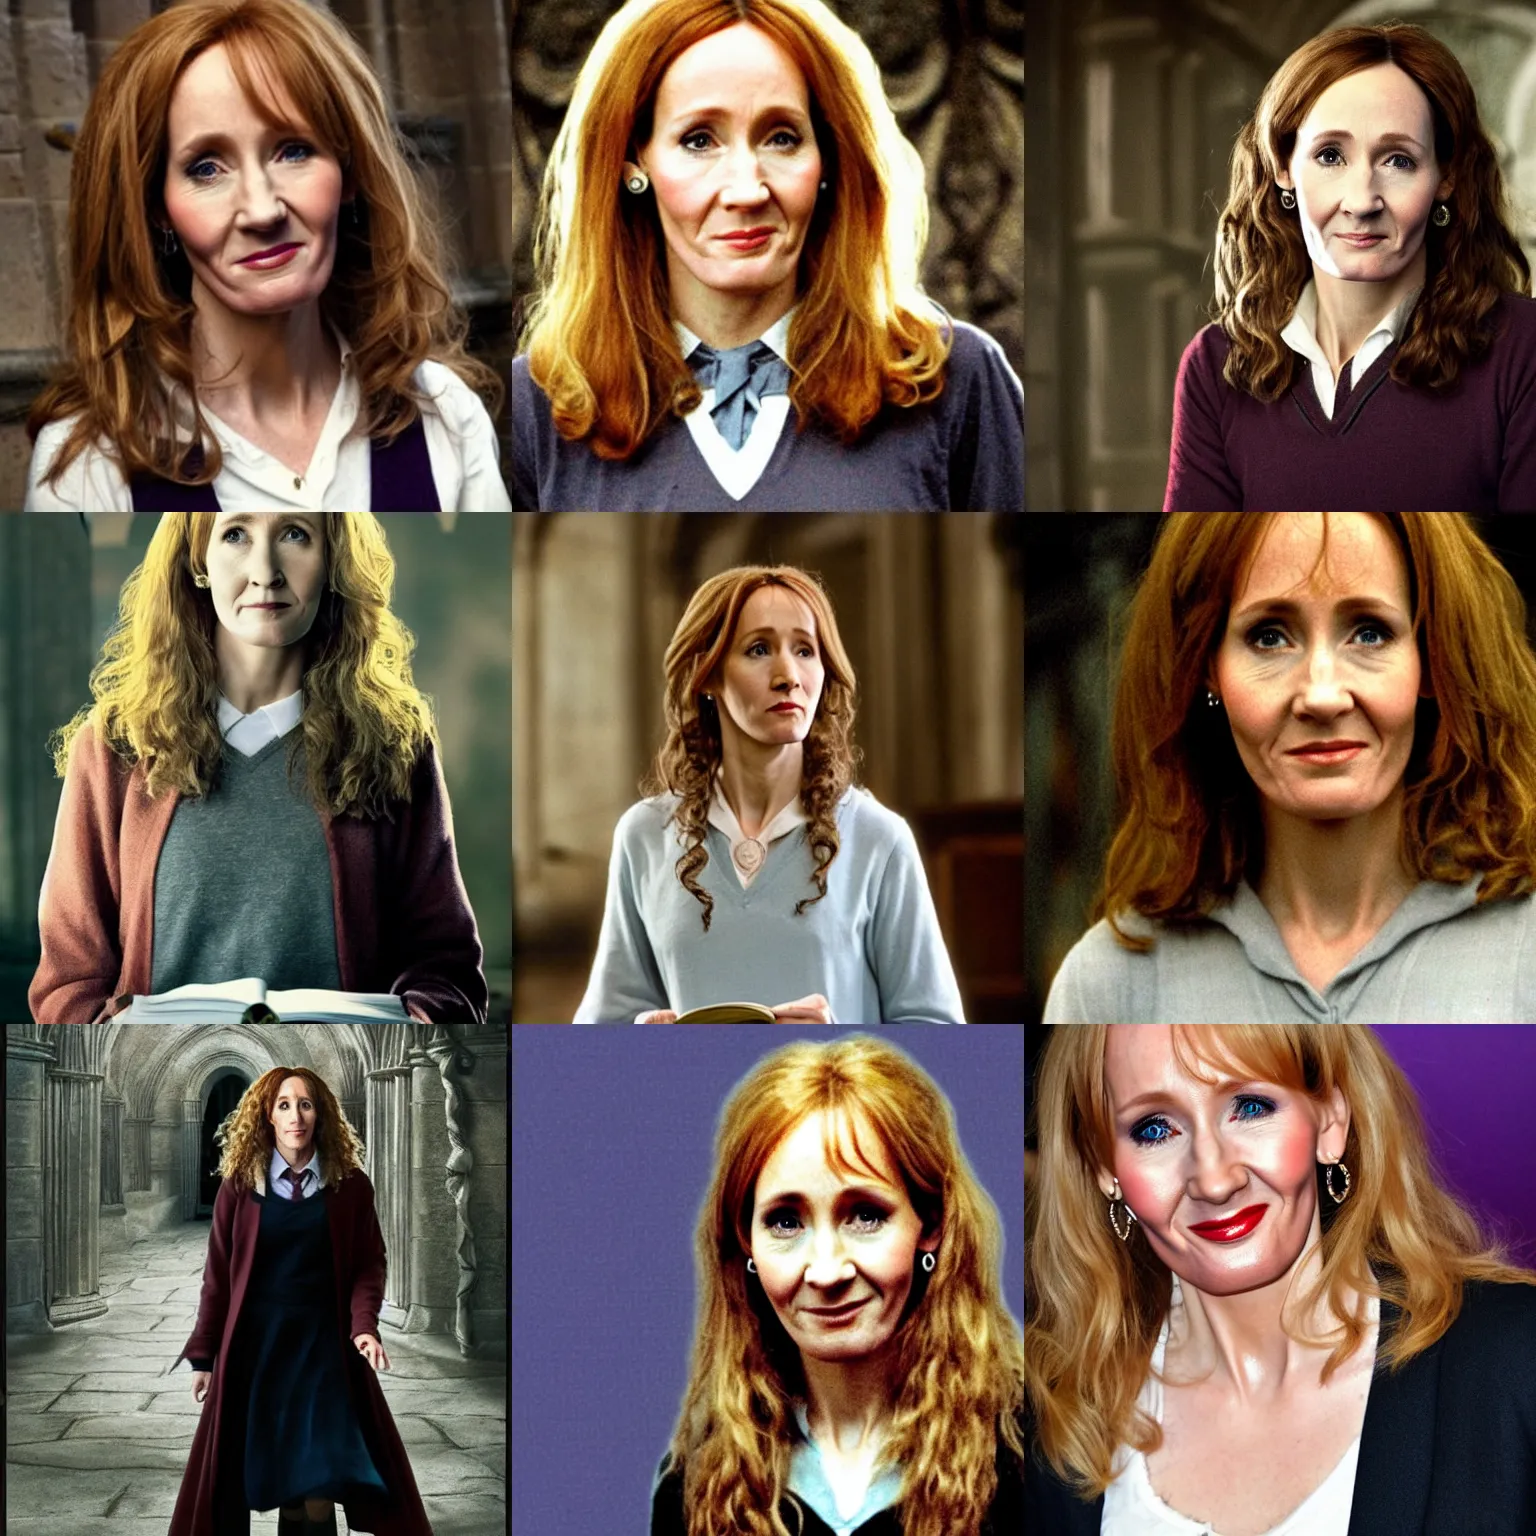 Prompt: J.k Rowling as Hermione